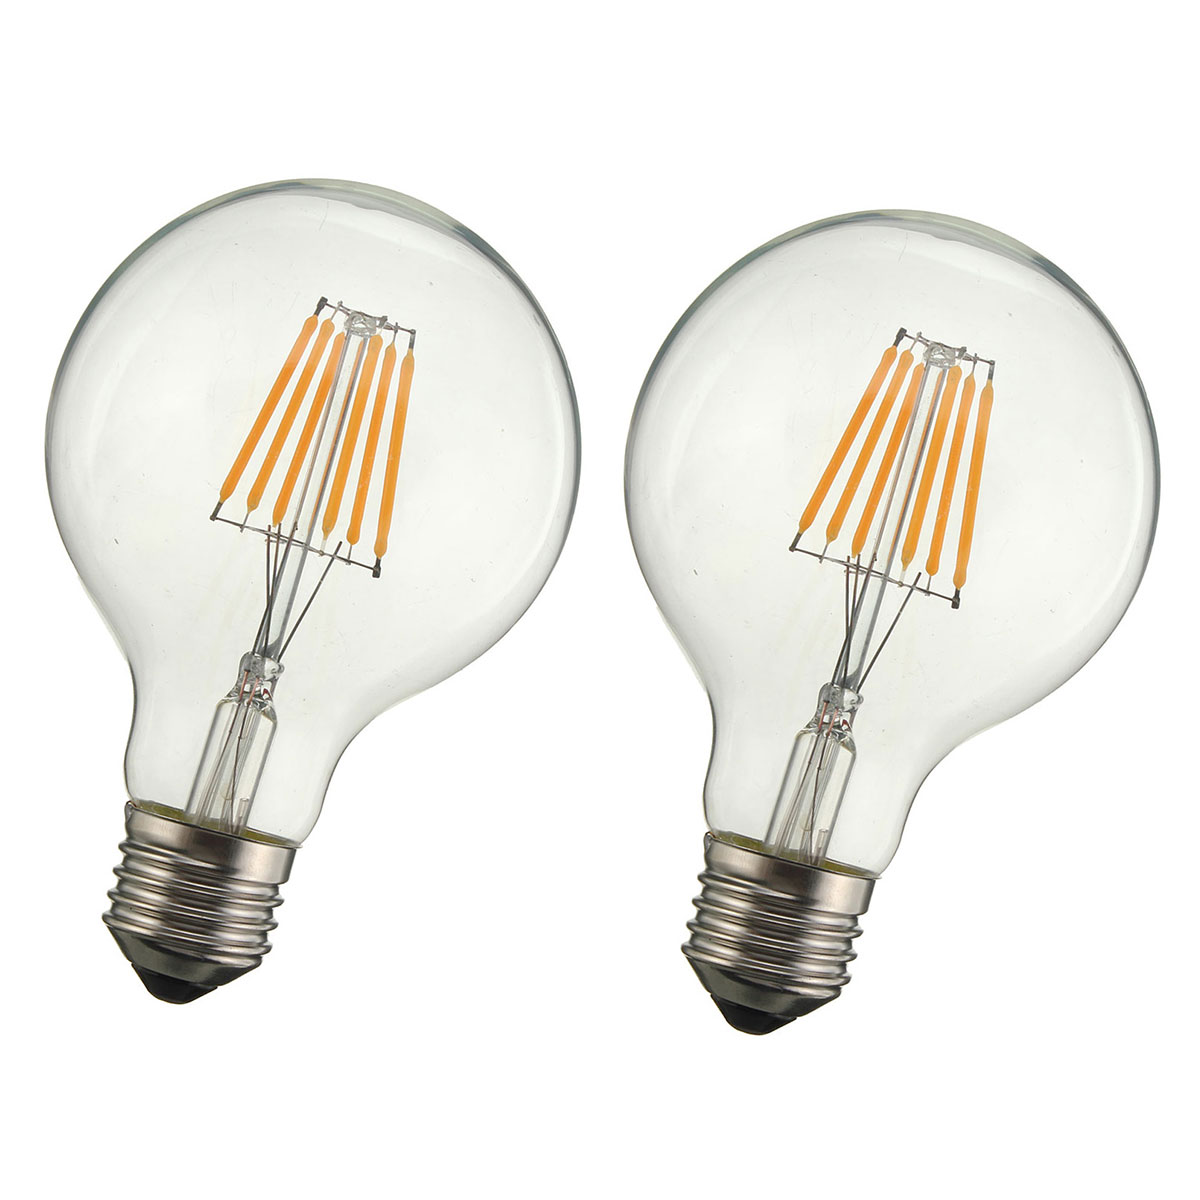 Dimmable-G80-E27-6W-COB-Warm-White-600Lumens-Retro-Vintage-Light-Lamp-Bulb-AC110V-AC220V-1074483-3